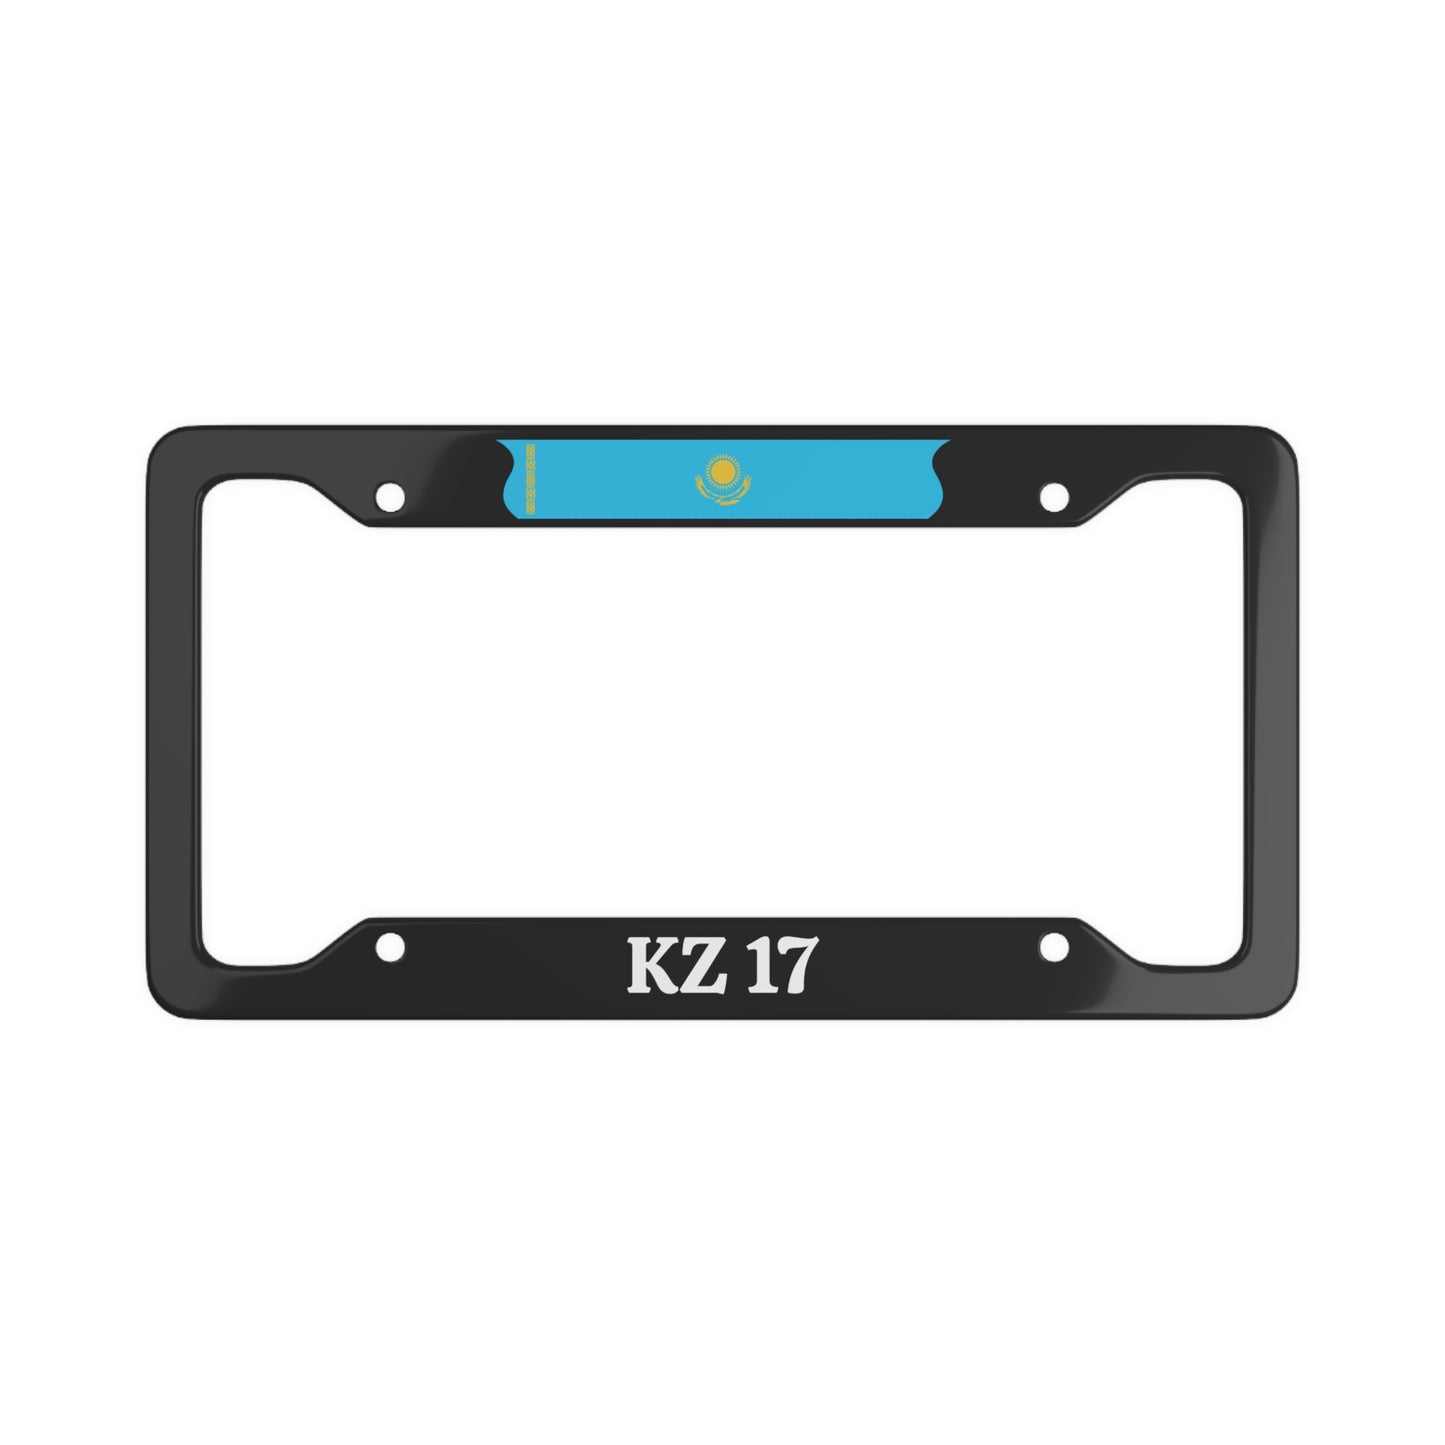 KZ 17 License Plate Frame